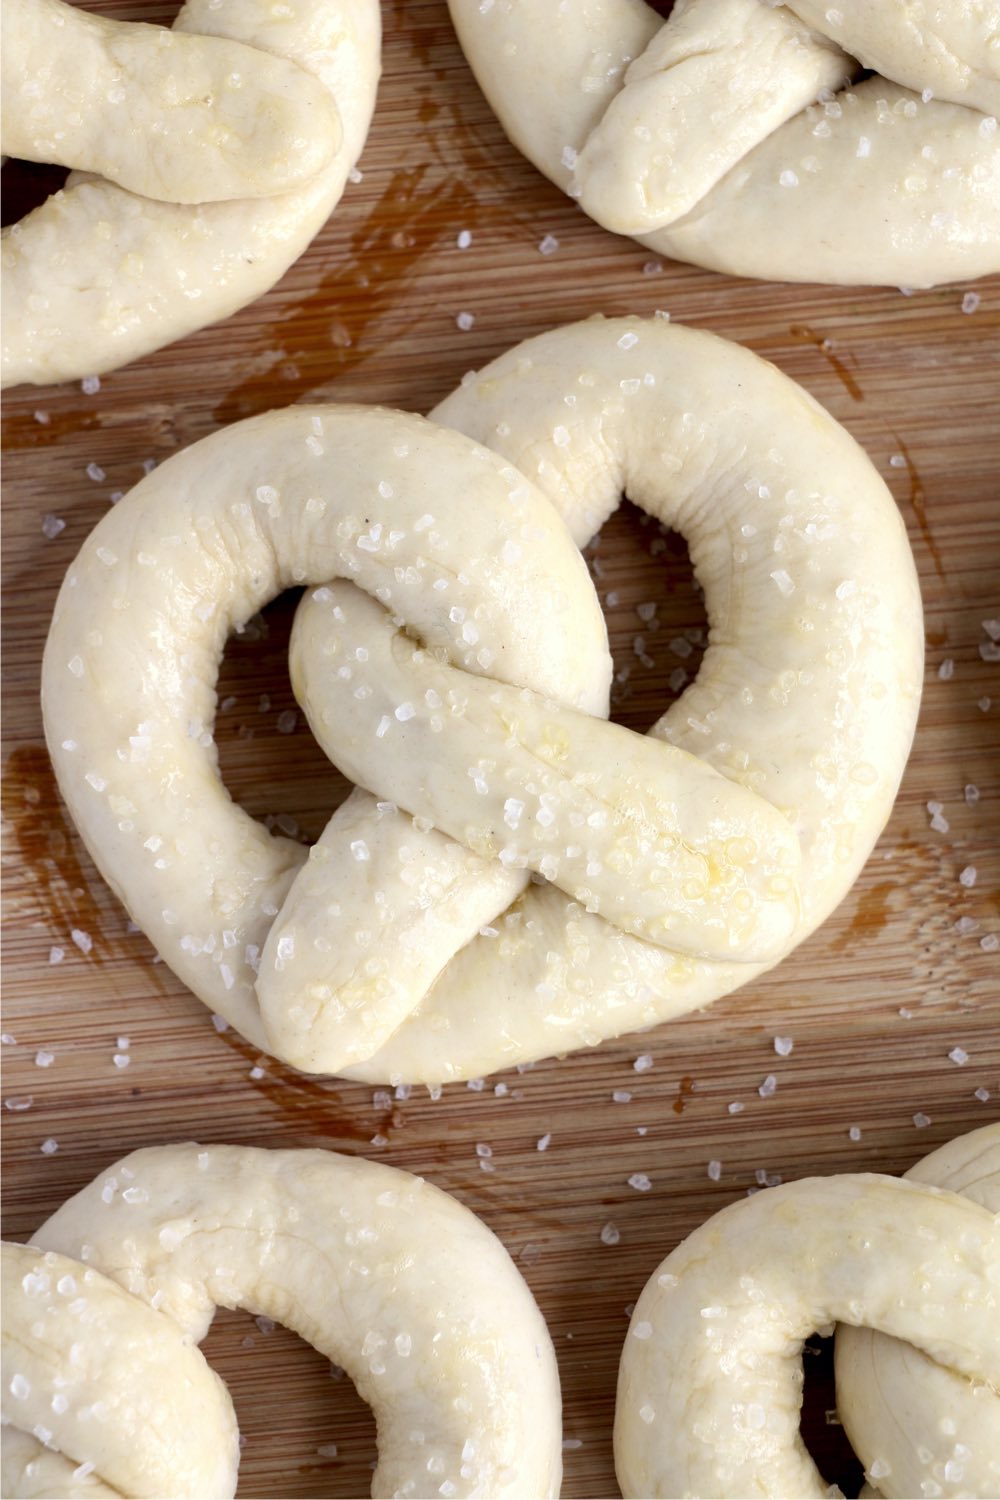 pretzel dough sprinkled with coarse sea salt